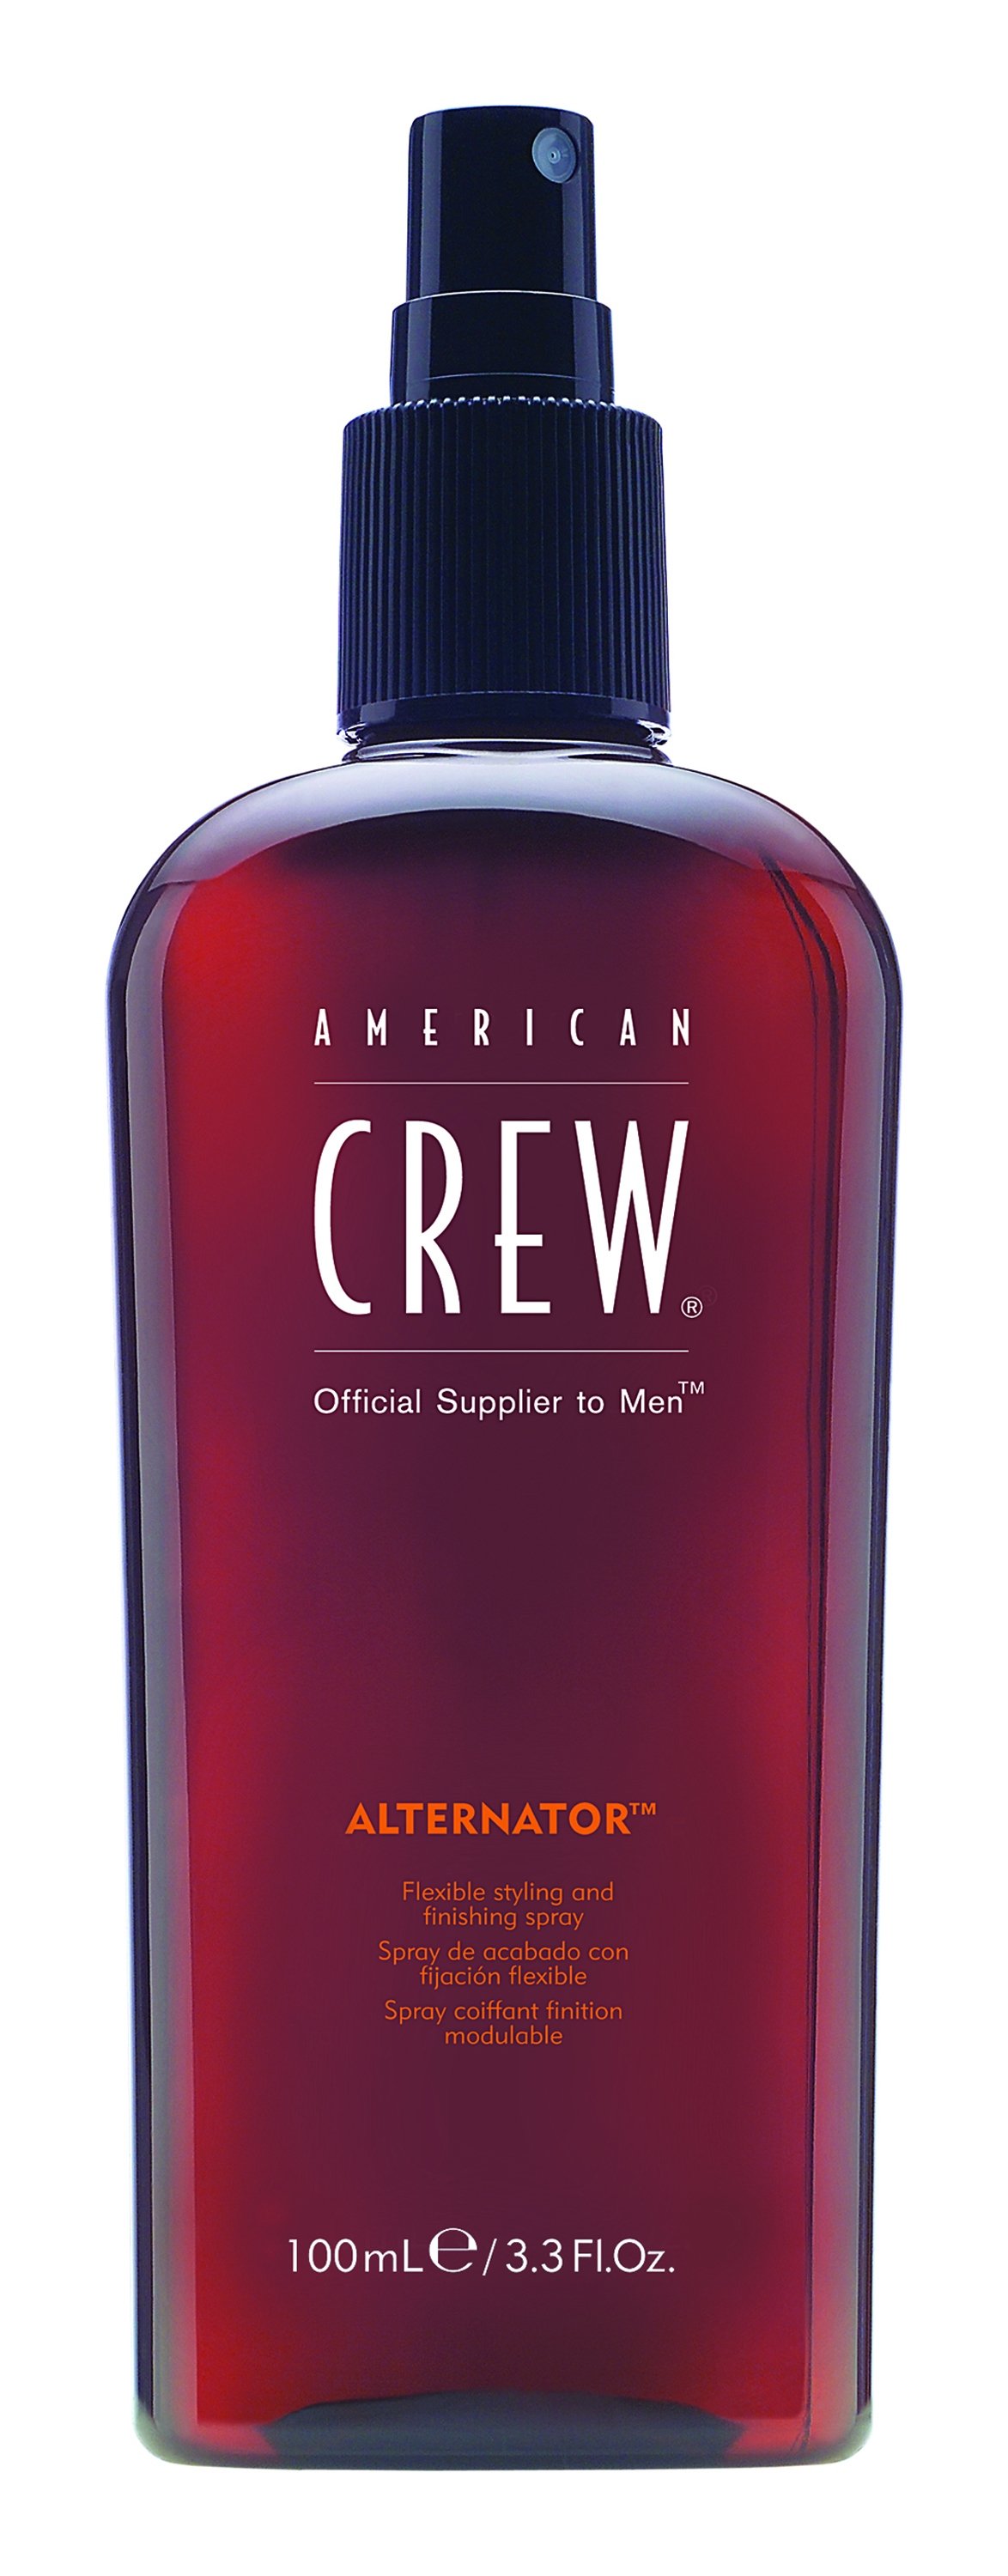 Мужские средства для укладки волос:  AMERICAN CREW -  Спрей для укладки волос эластичной фиксации American Crew Alternator Finishing Spray (100 мл) (100 мл)